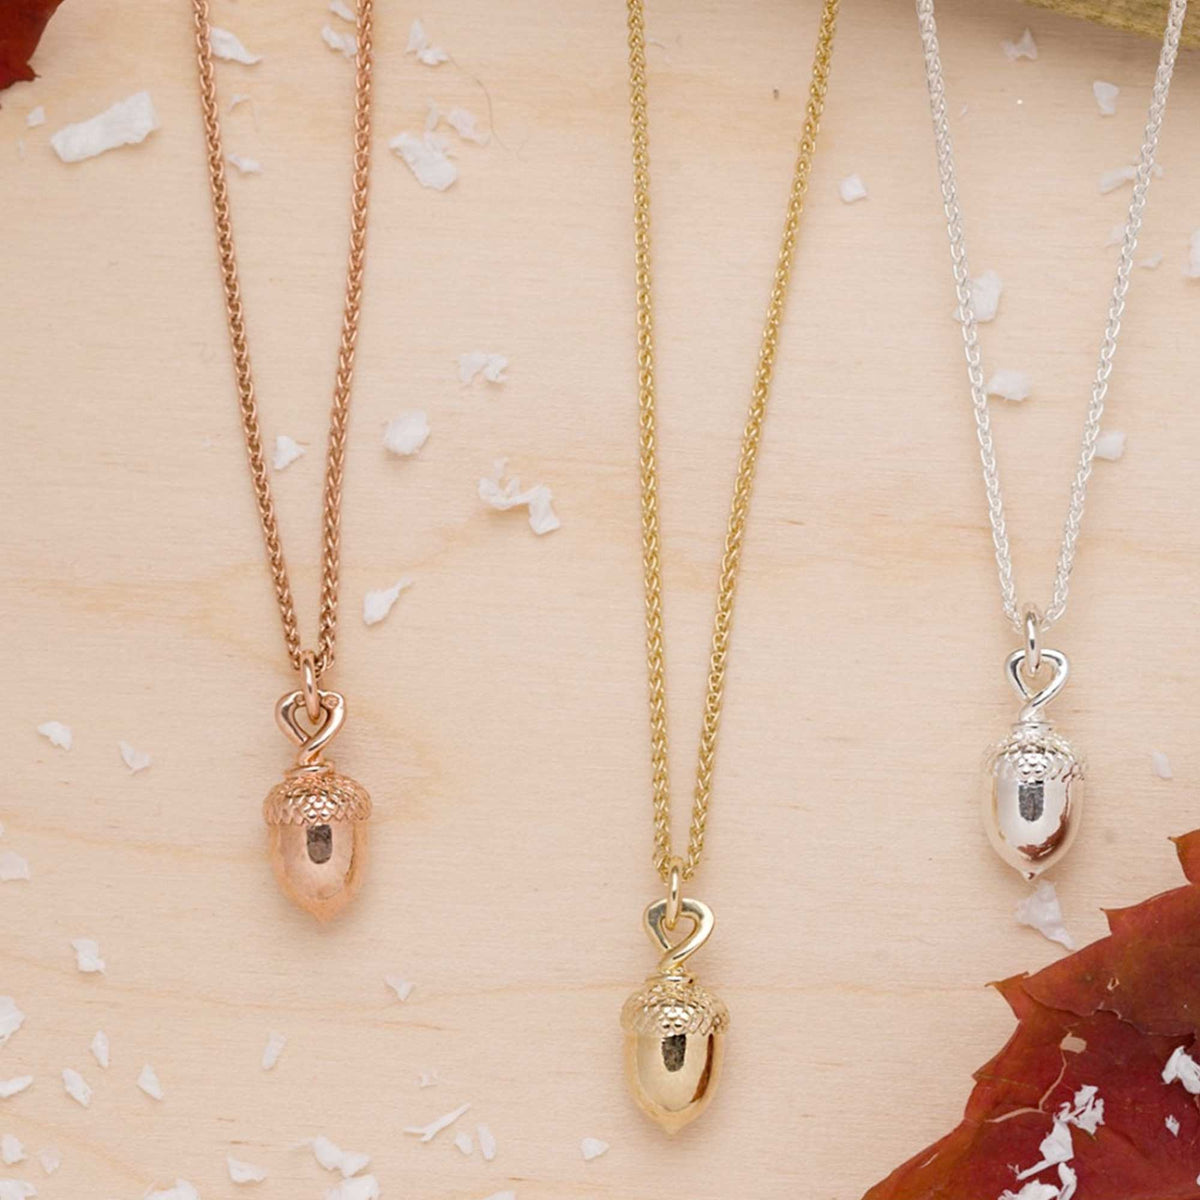 Unique Rose Gold Necklace with Acorn Pendant - Scarlett Jewellery